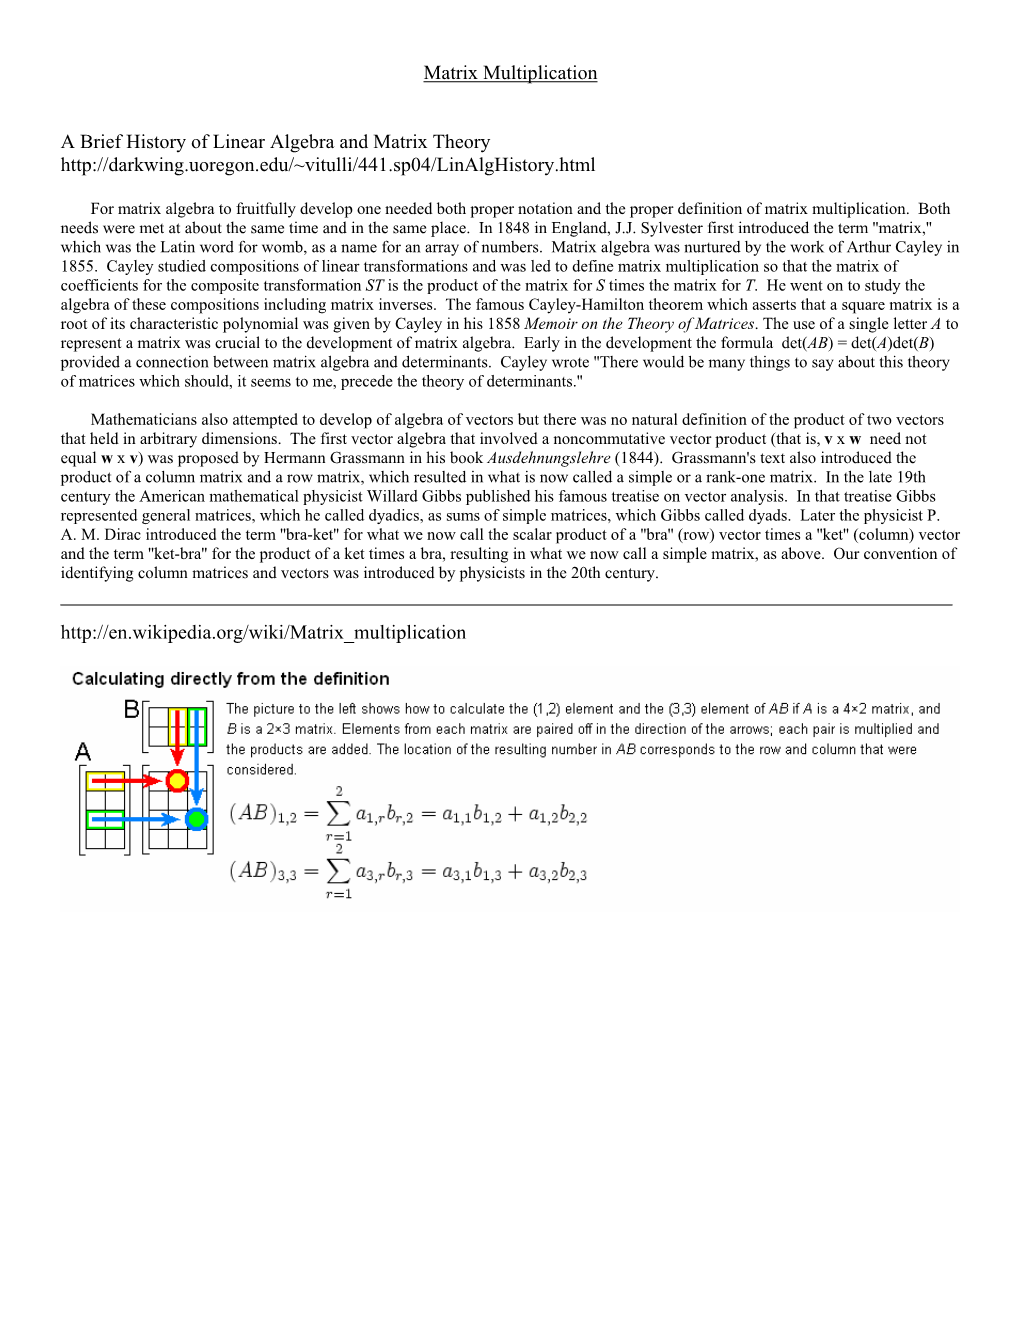 Matrix Multiplication a Brief History of Linear Algebra and Matrix Theory